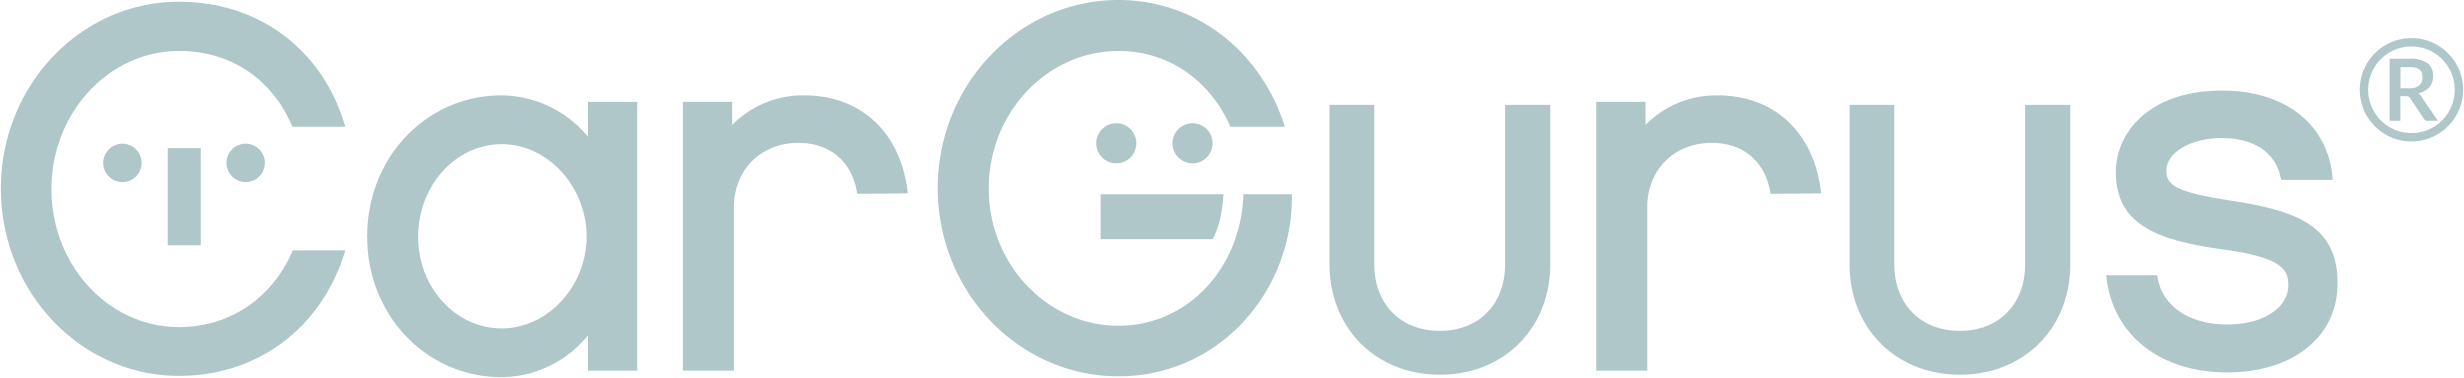 Car Gurus Logo - Transparent